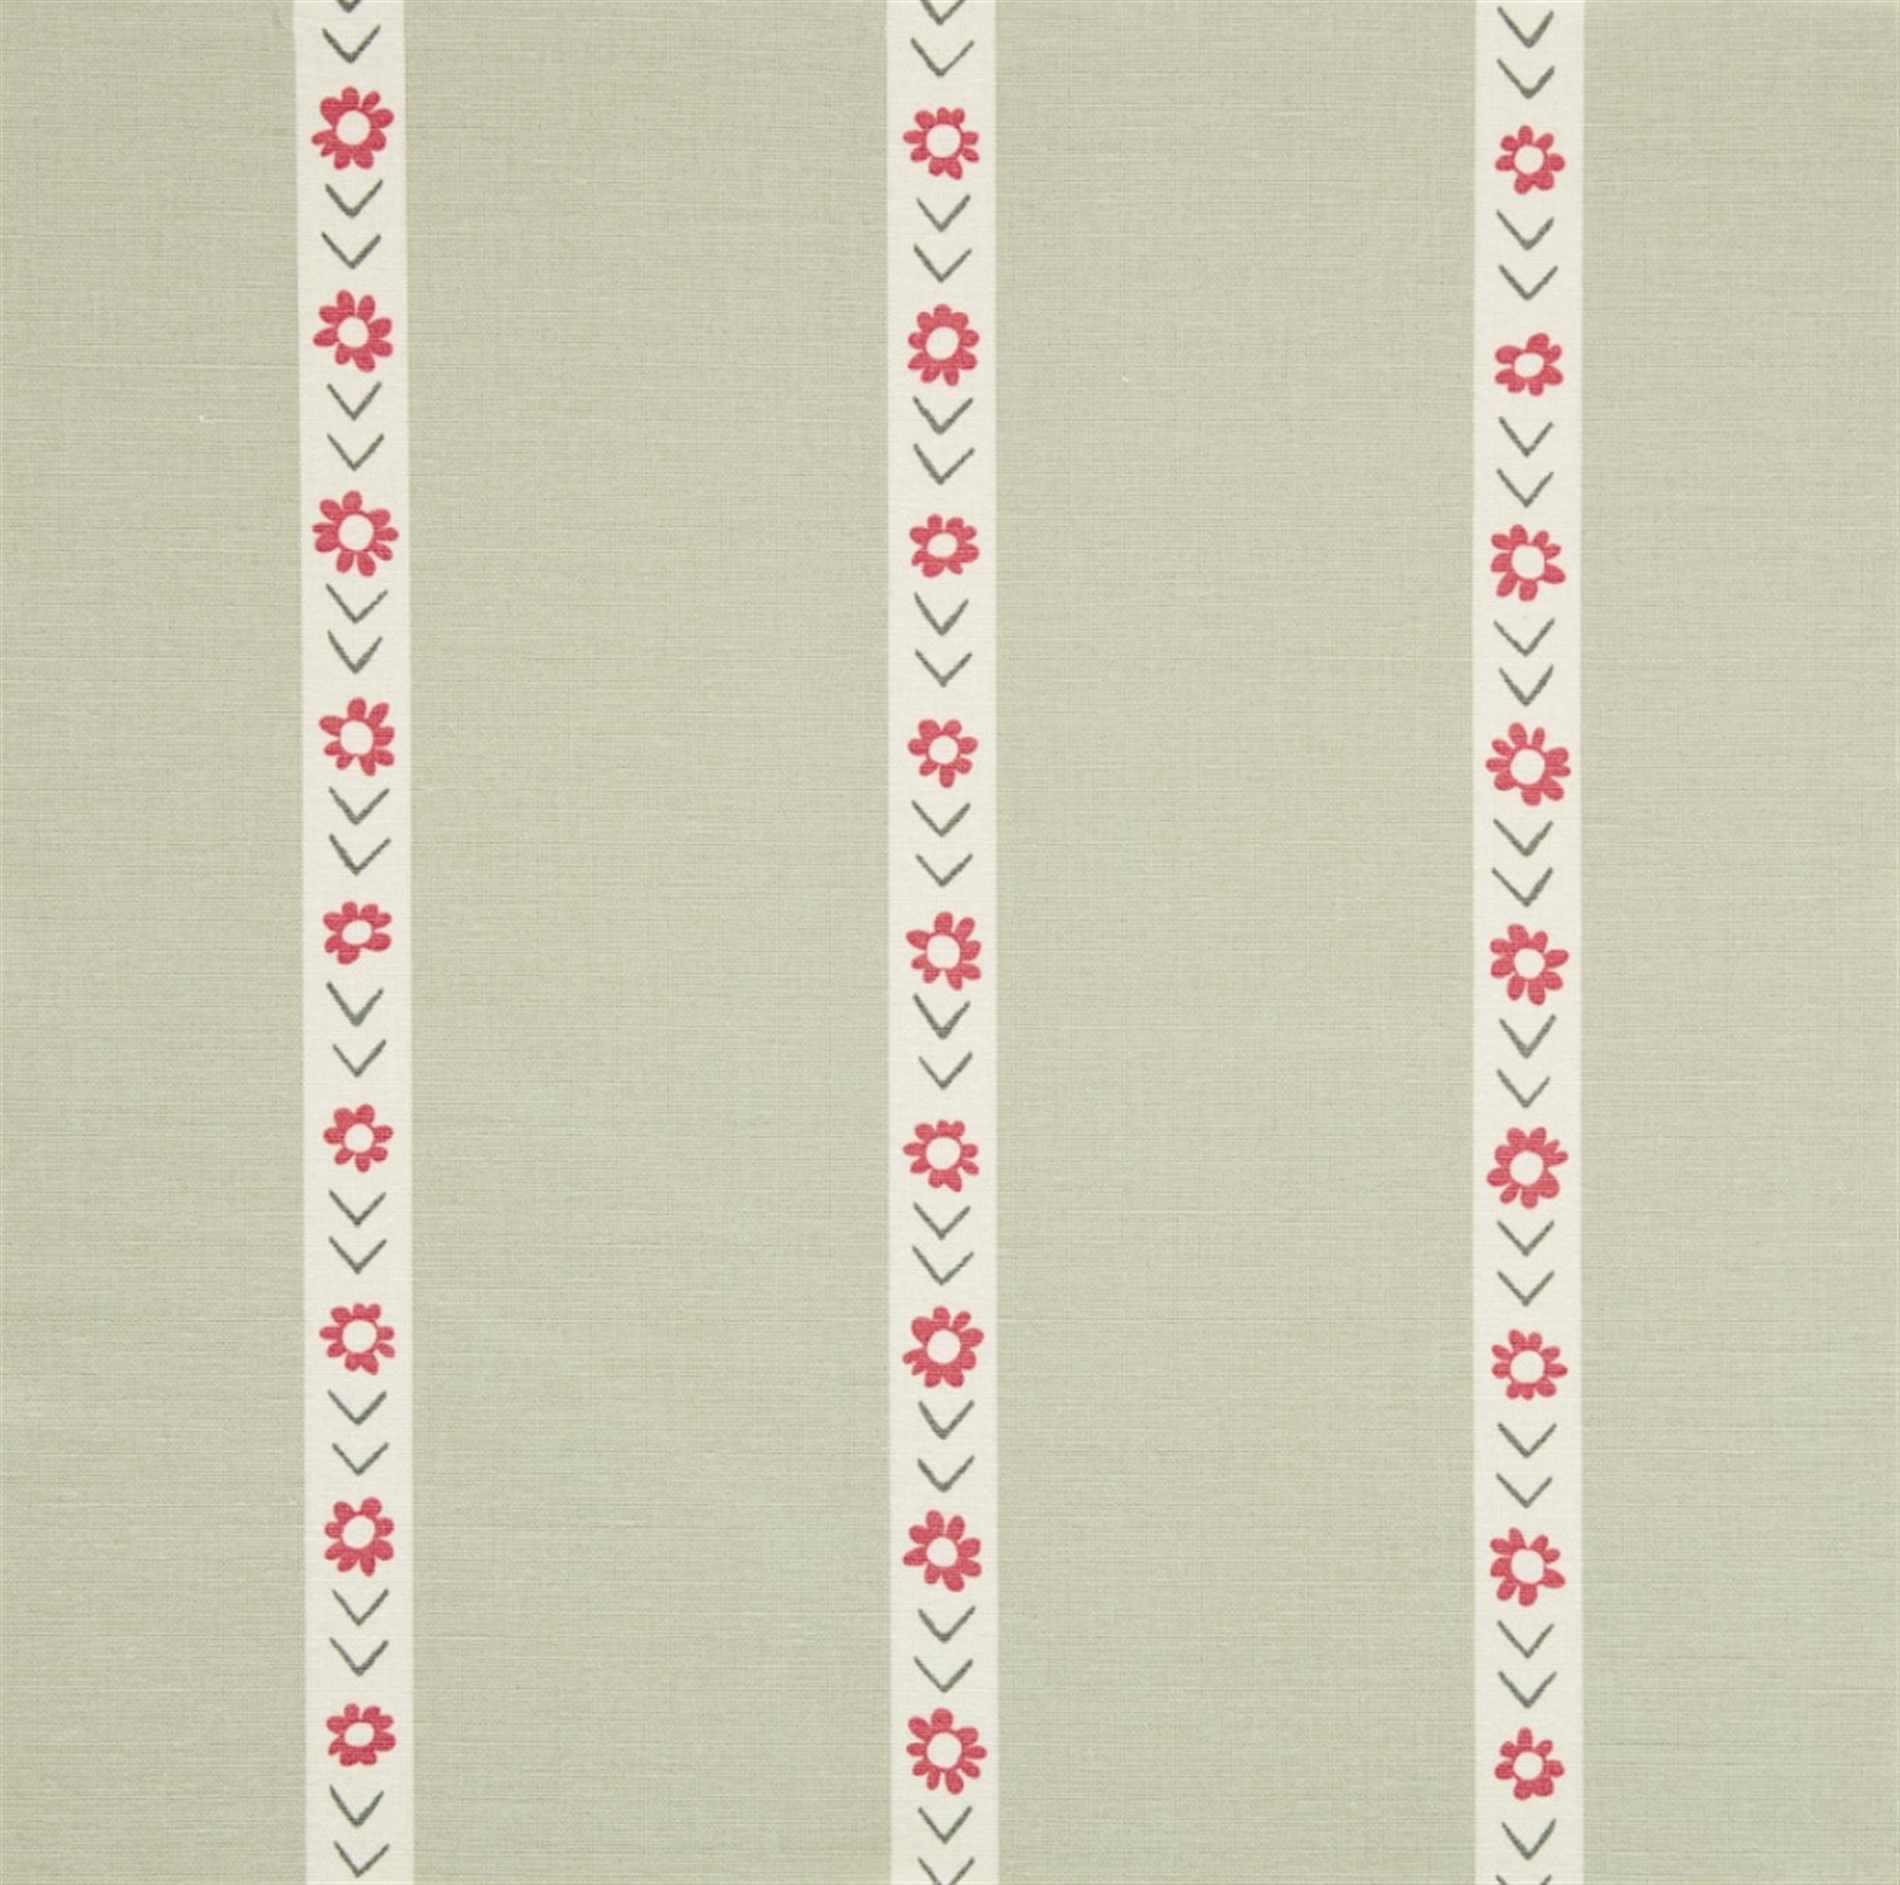 https://www.vanessaarbuthnott.co.uk/uploads/fabrics/b8fe5589-5cf7-4150-acf6-acc0c6f695ca/Zoomed-Floral-Stripe-Pigeon-Soft-Raspberry-Charcoal-FS-19-1-38-LR.jpg